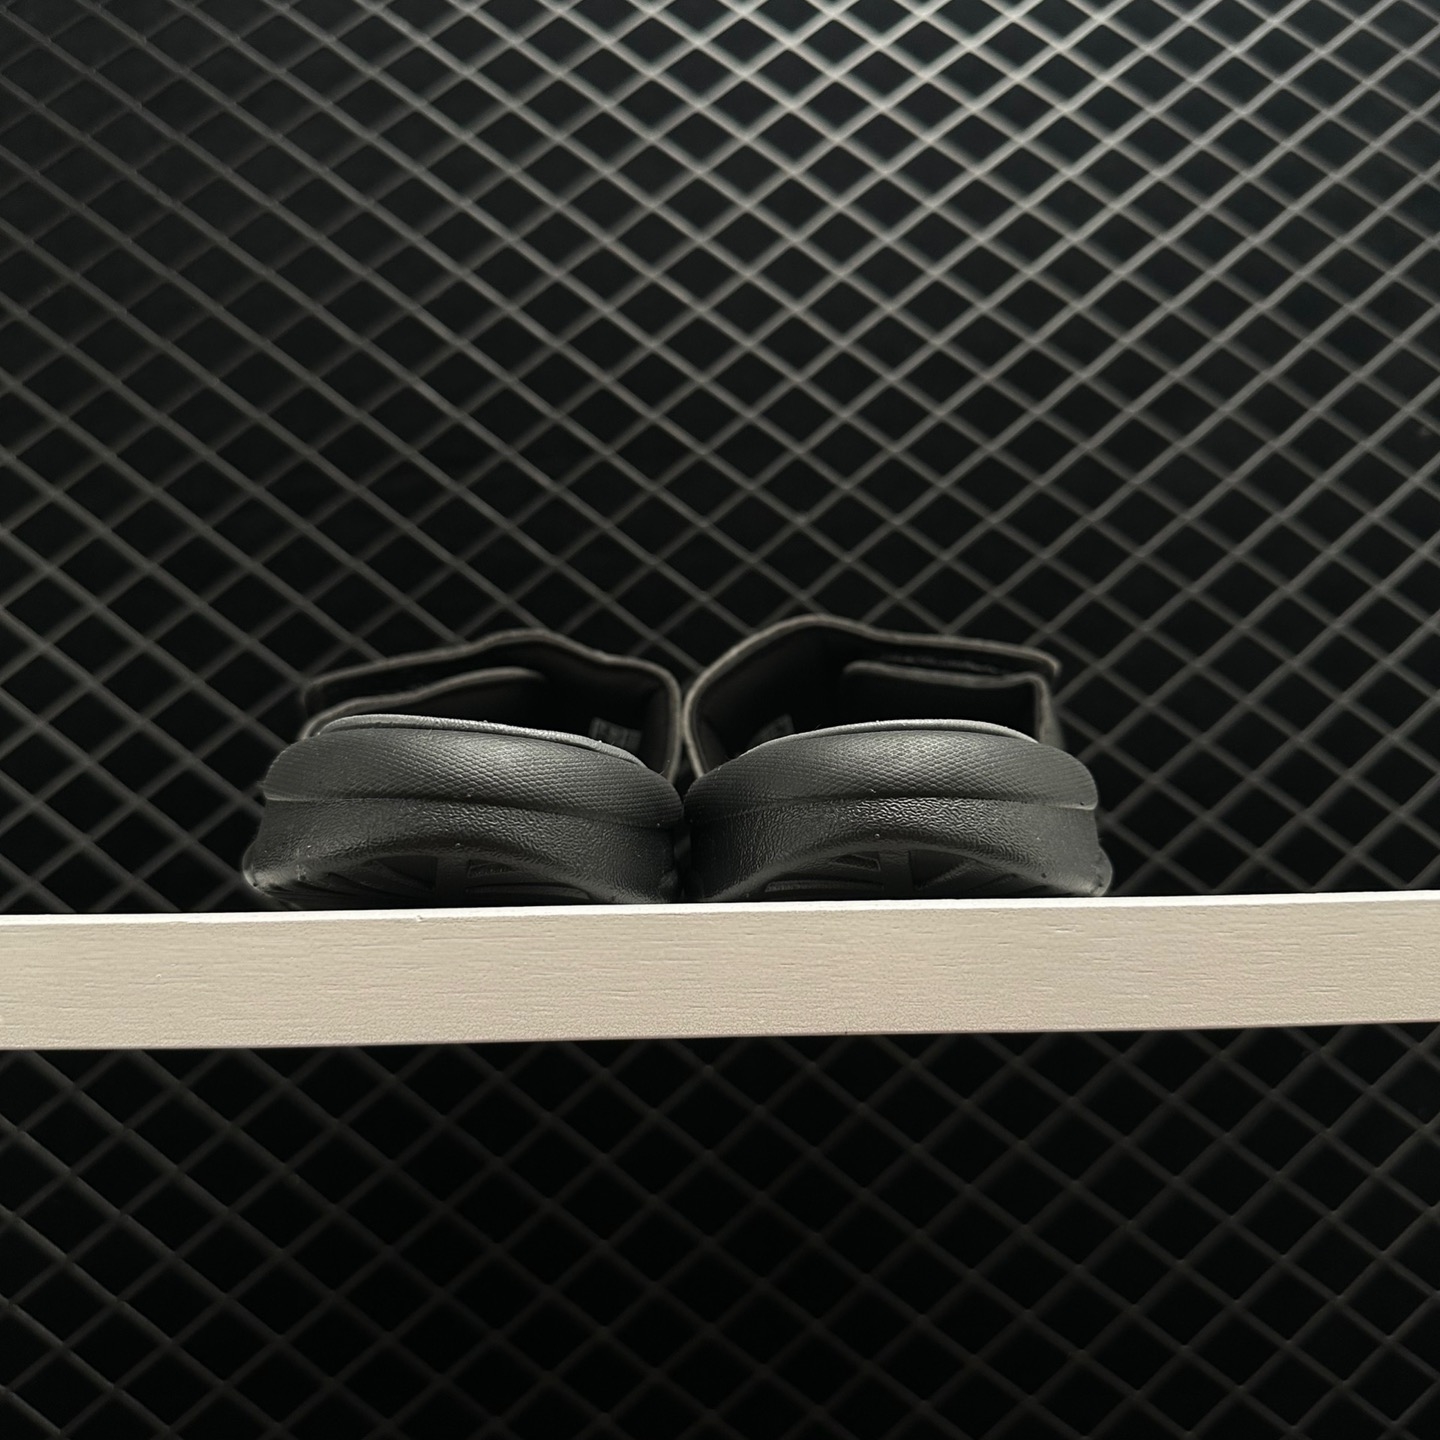 PUMA Black Royalcat Comfort Sandal 372280-01: Lightweight and Stylish Comfort for Your Feet